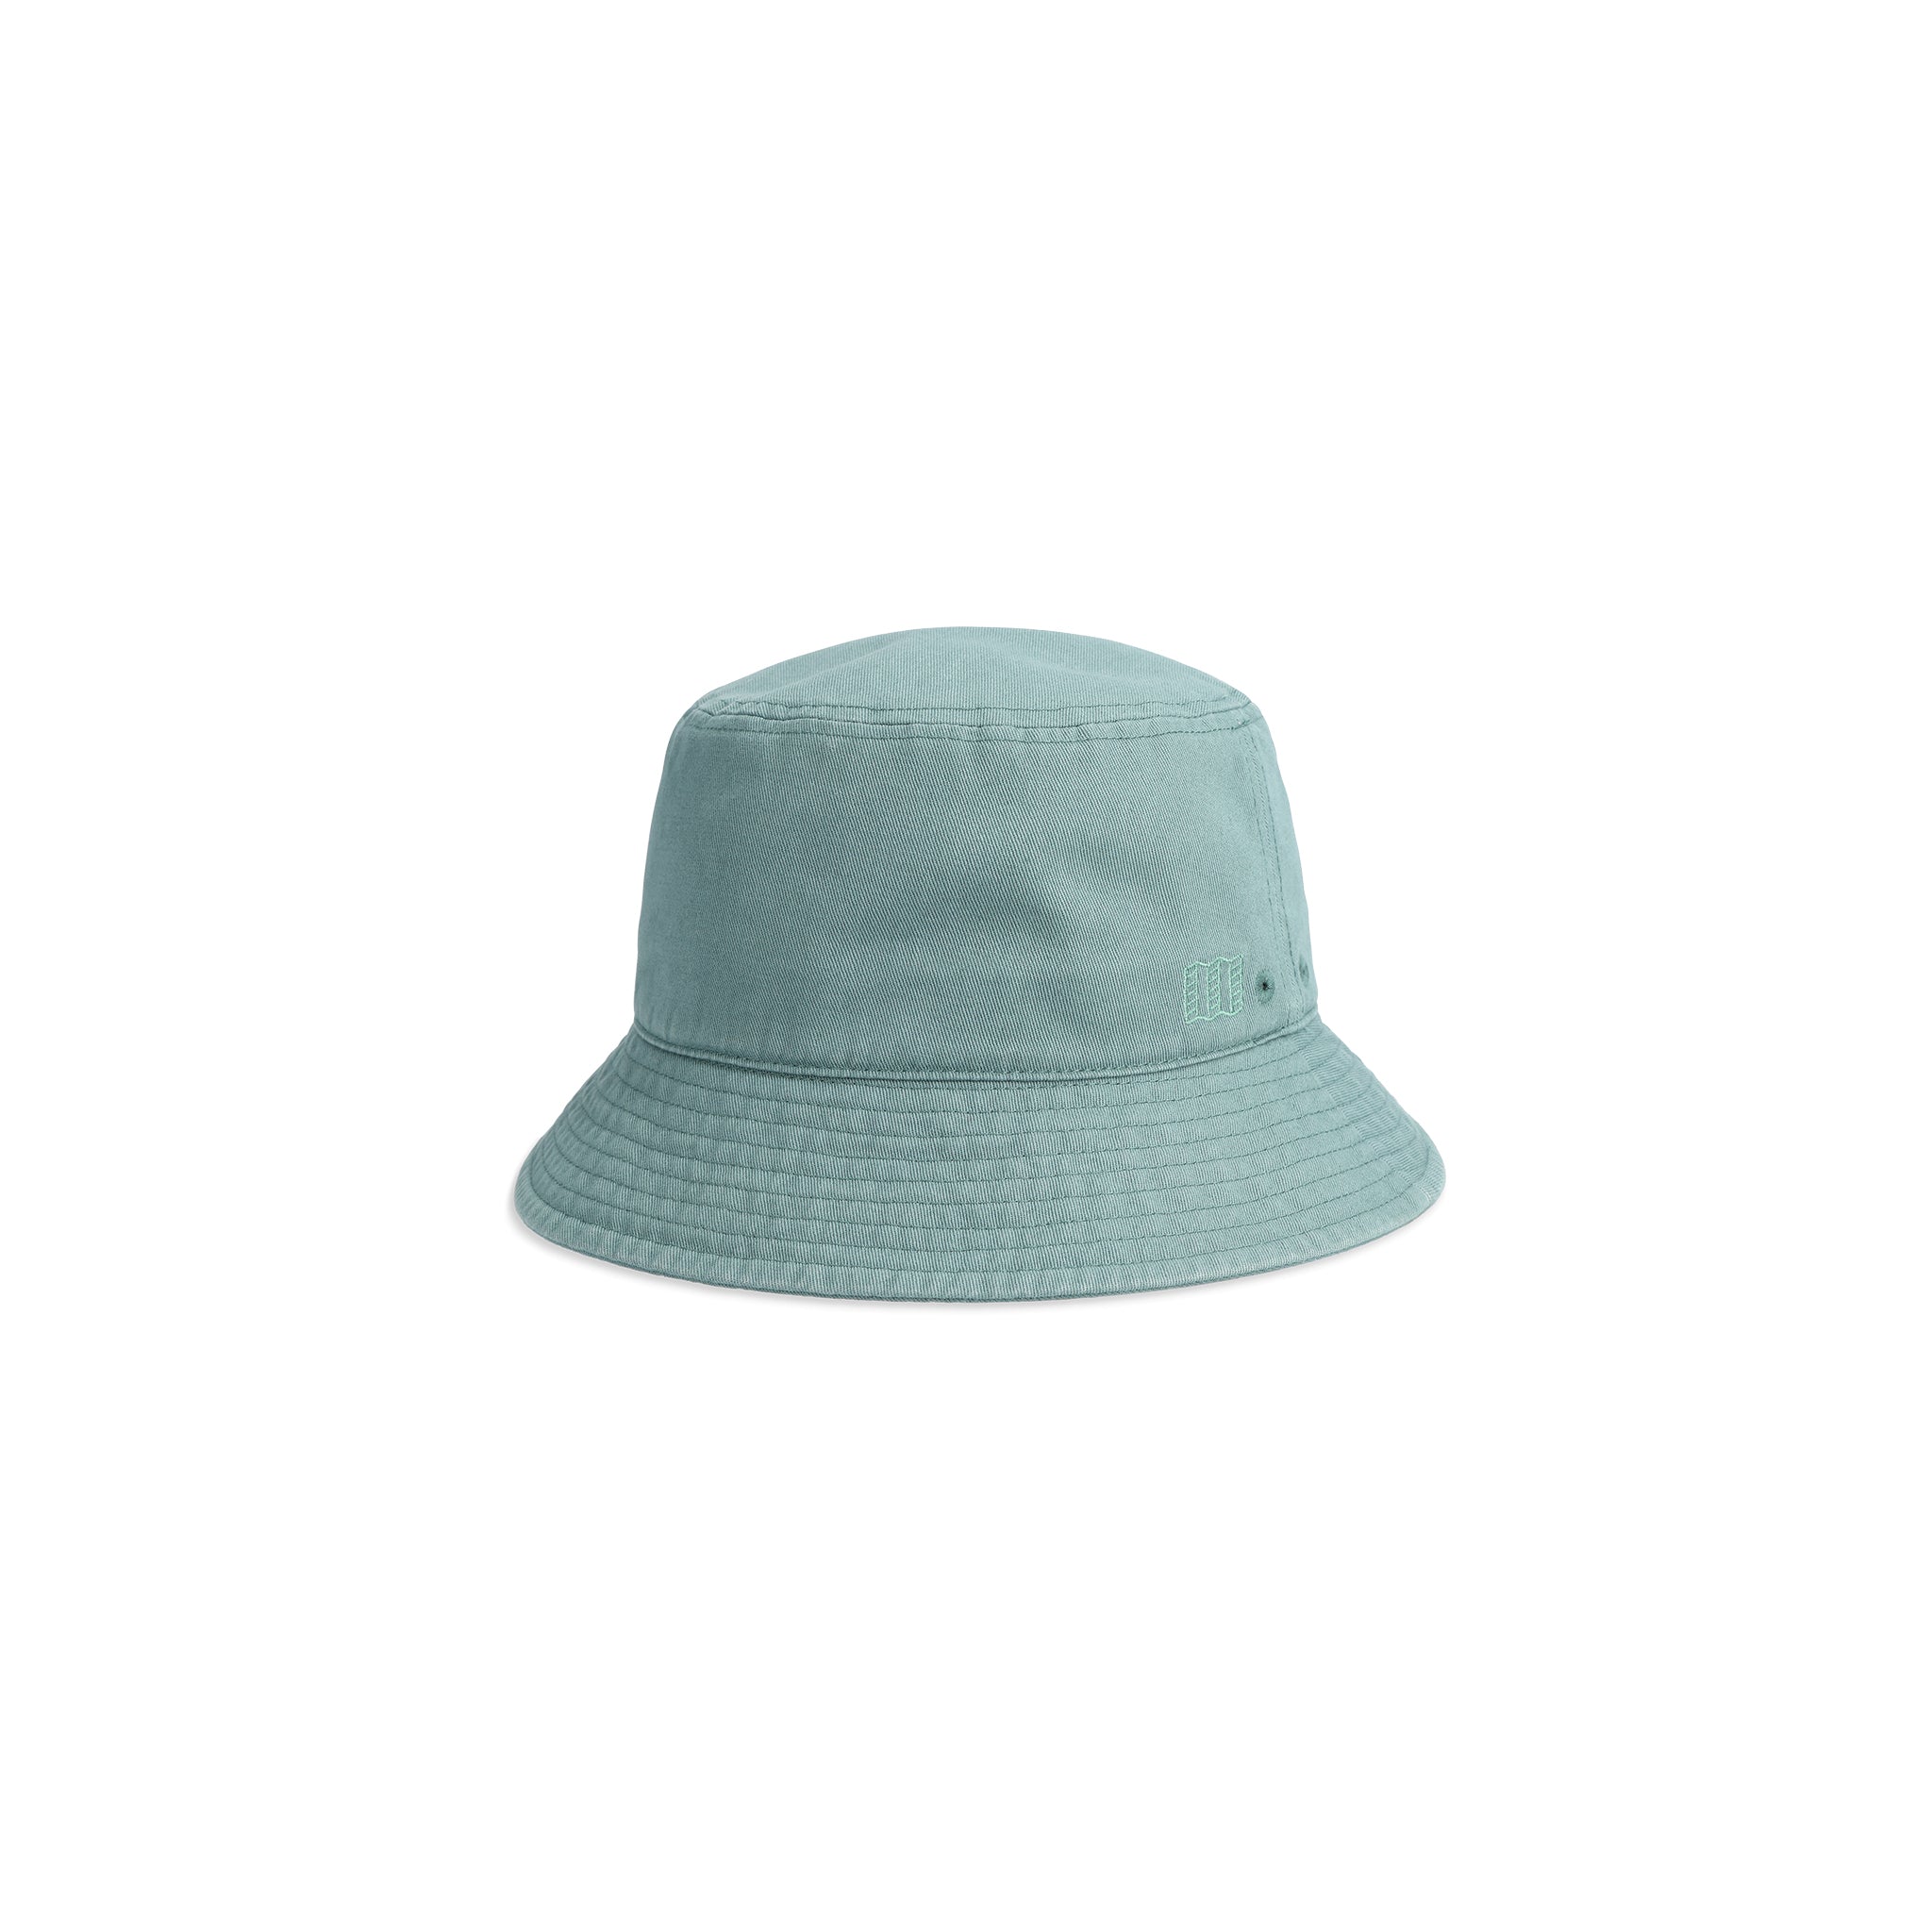 Front View of Topo Designs Dirt Bucket Hat in "Sea Pine"